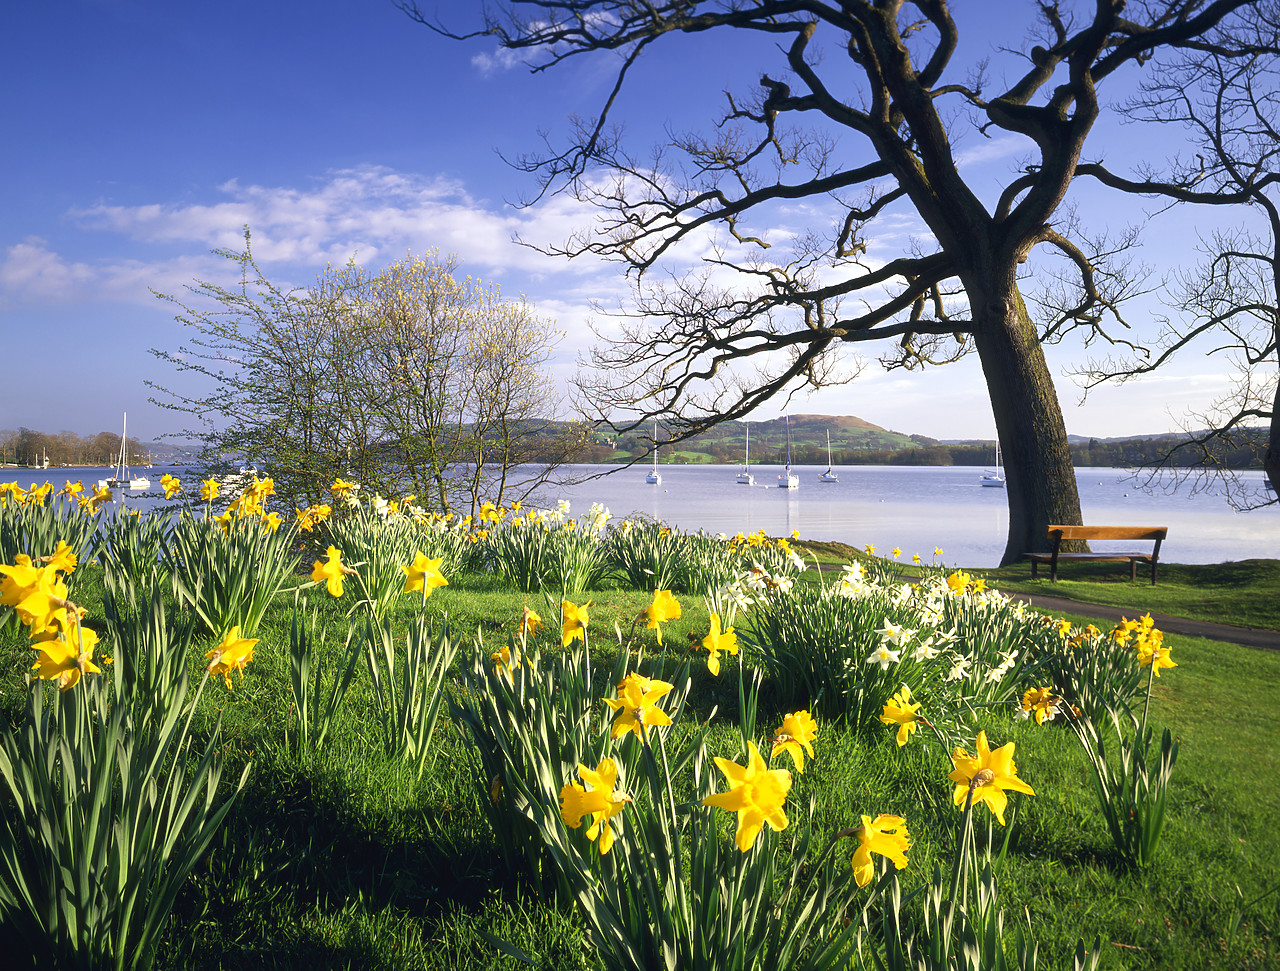 #970206-2 - Daffodils at Waterhead, Lake Windermere, Cumbria, England